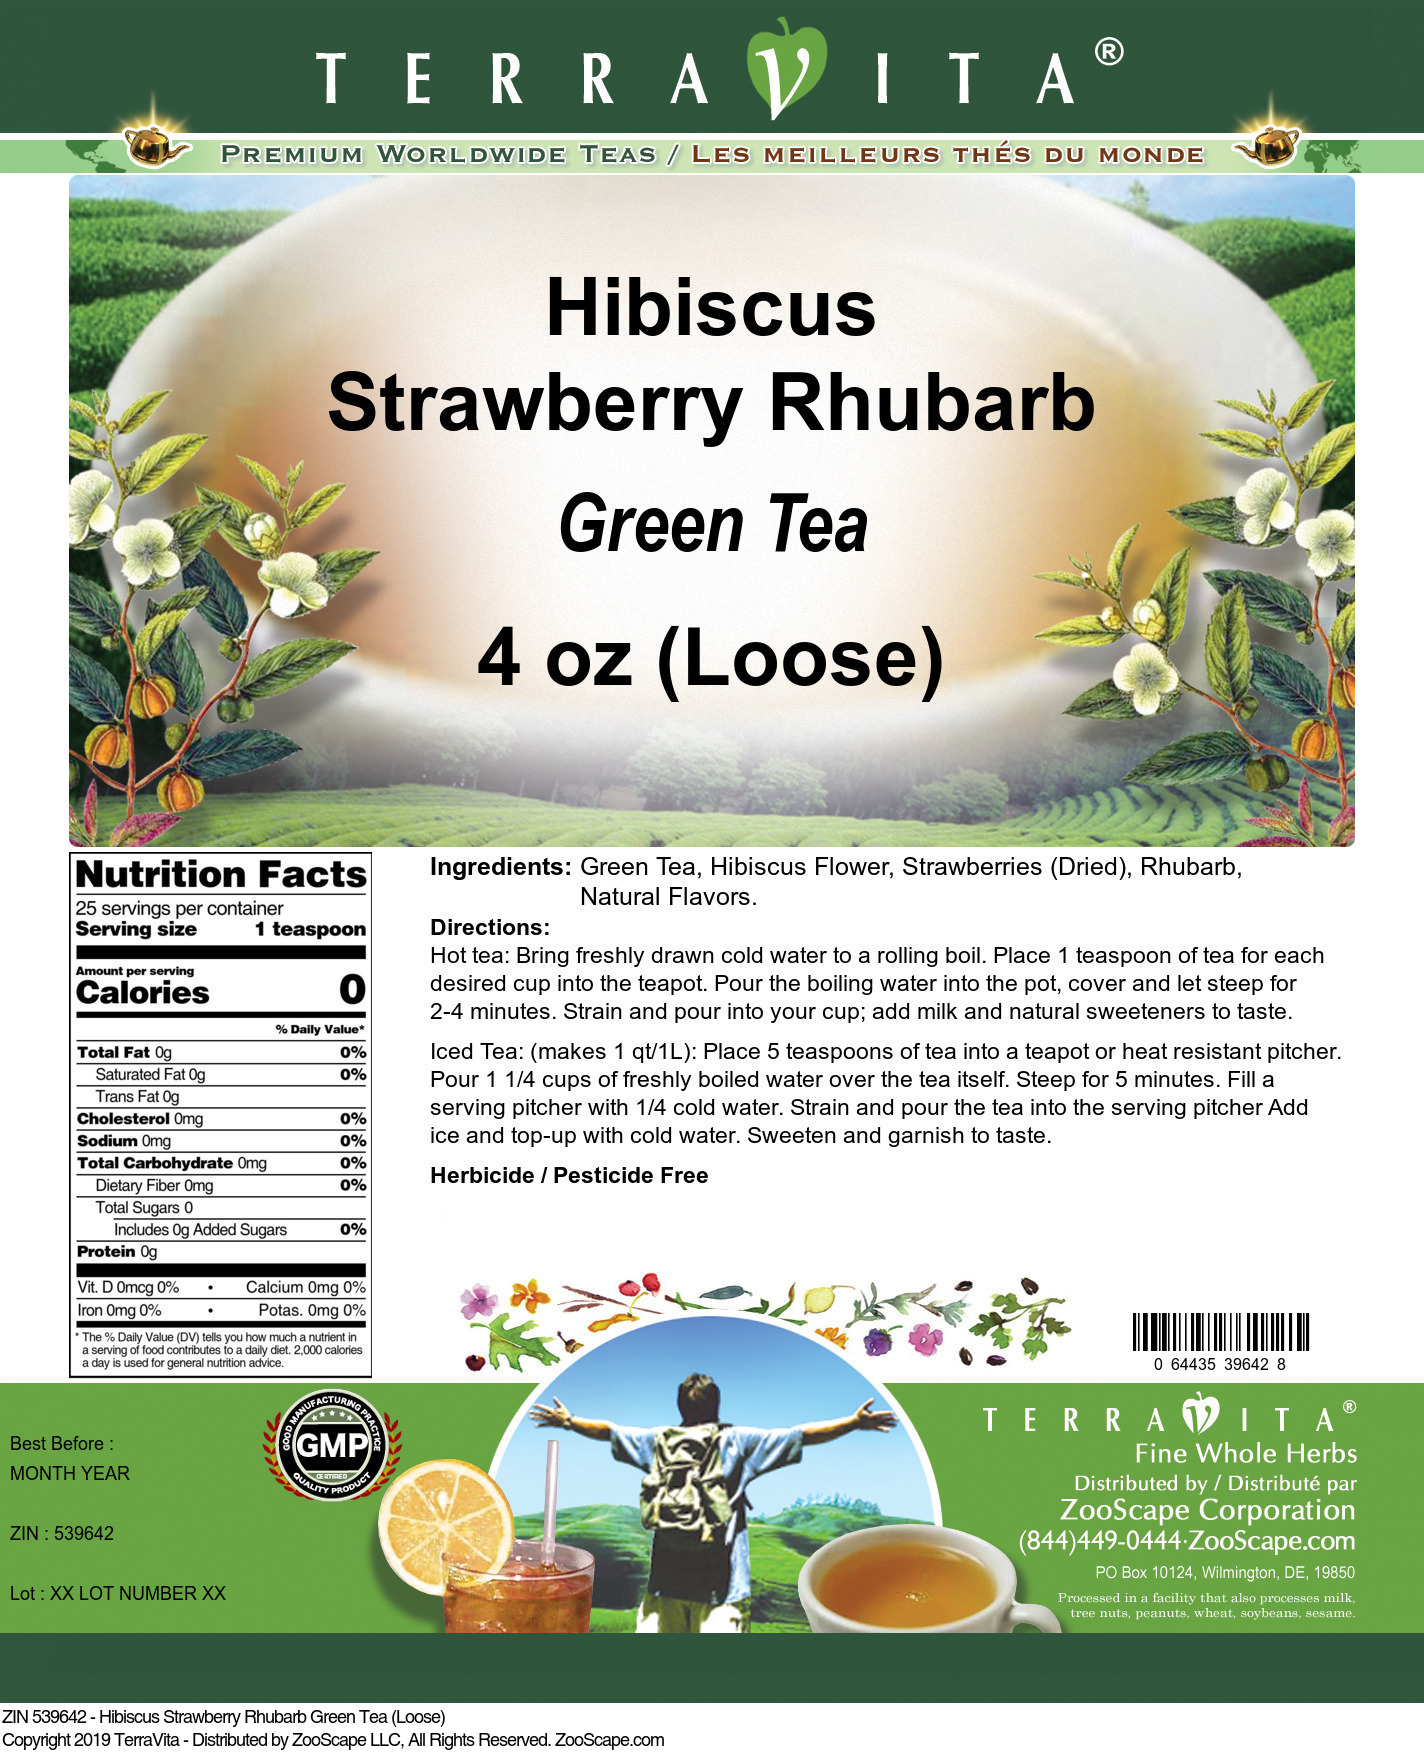 Hibiscus Strawberry Rhubarb Green Tea (Loose) - Label